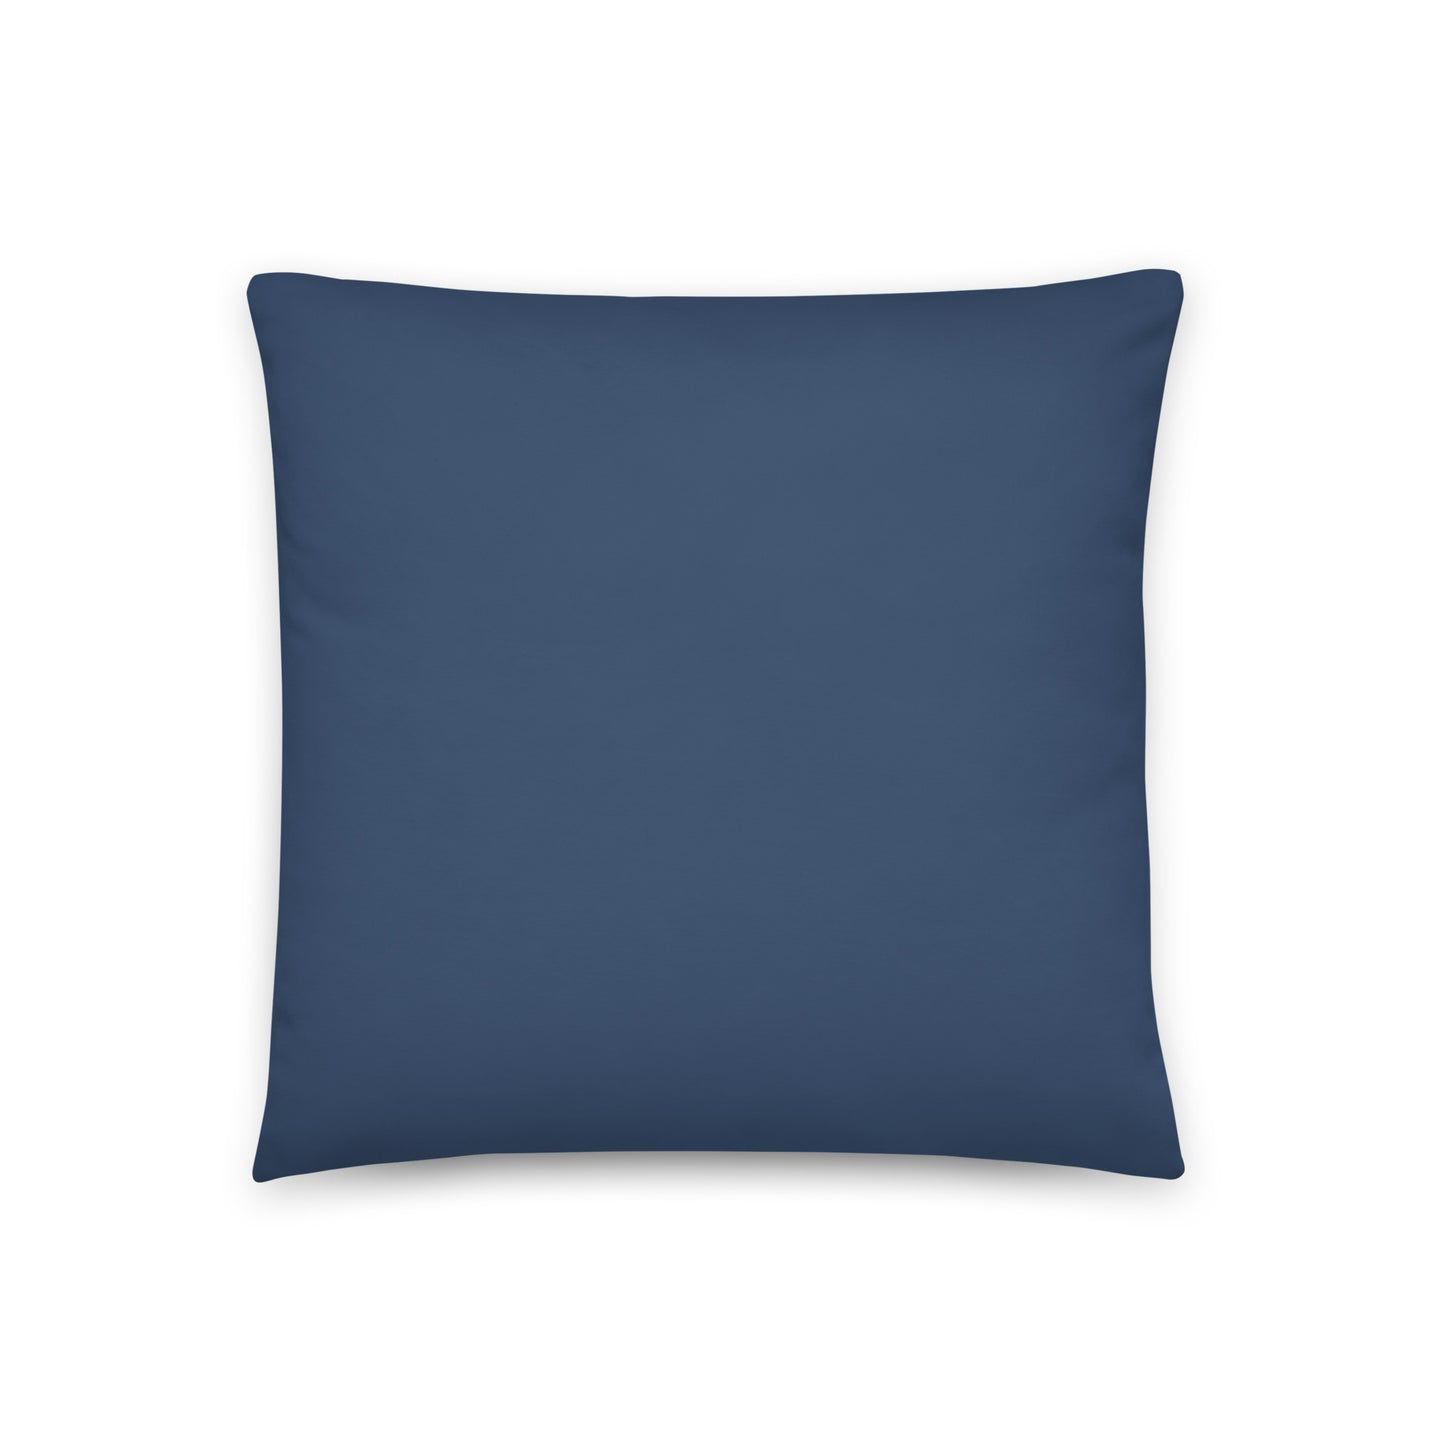 Basic Navy - Sustainably Made Pillows